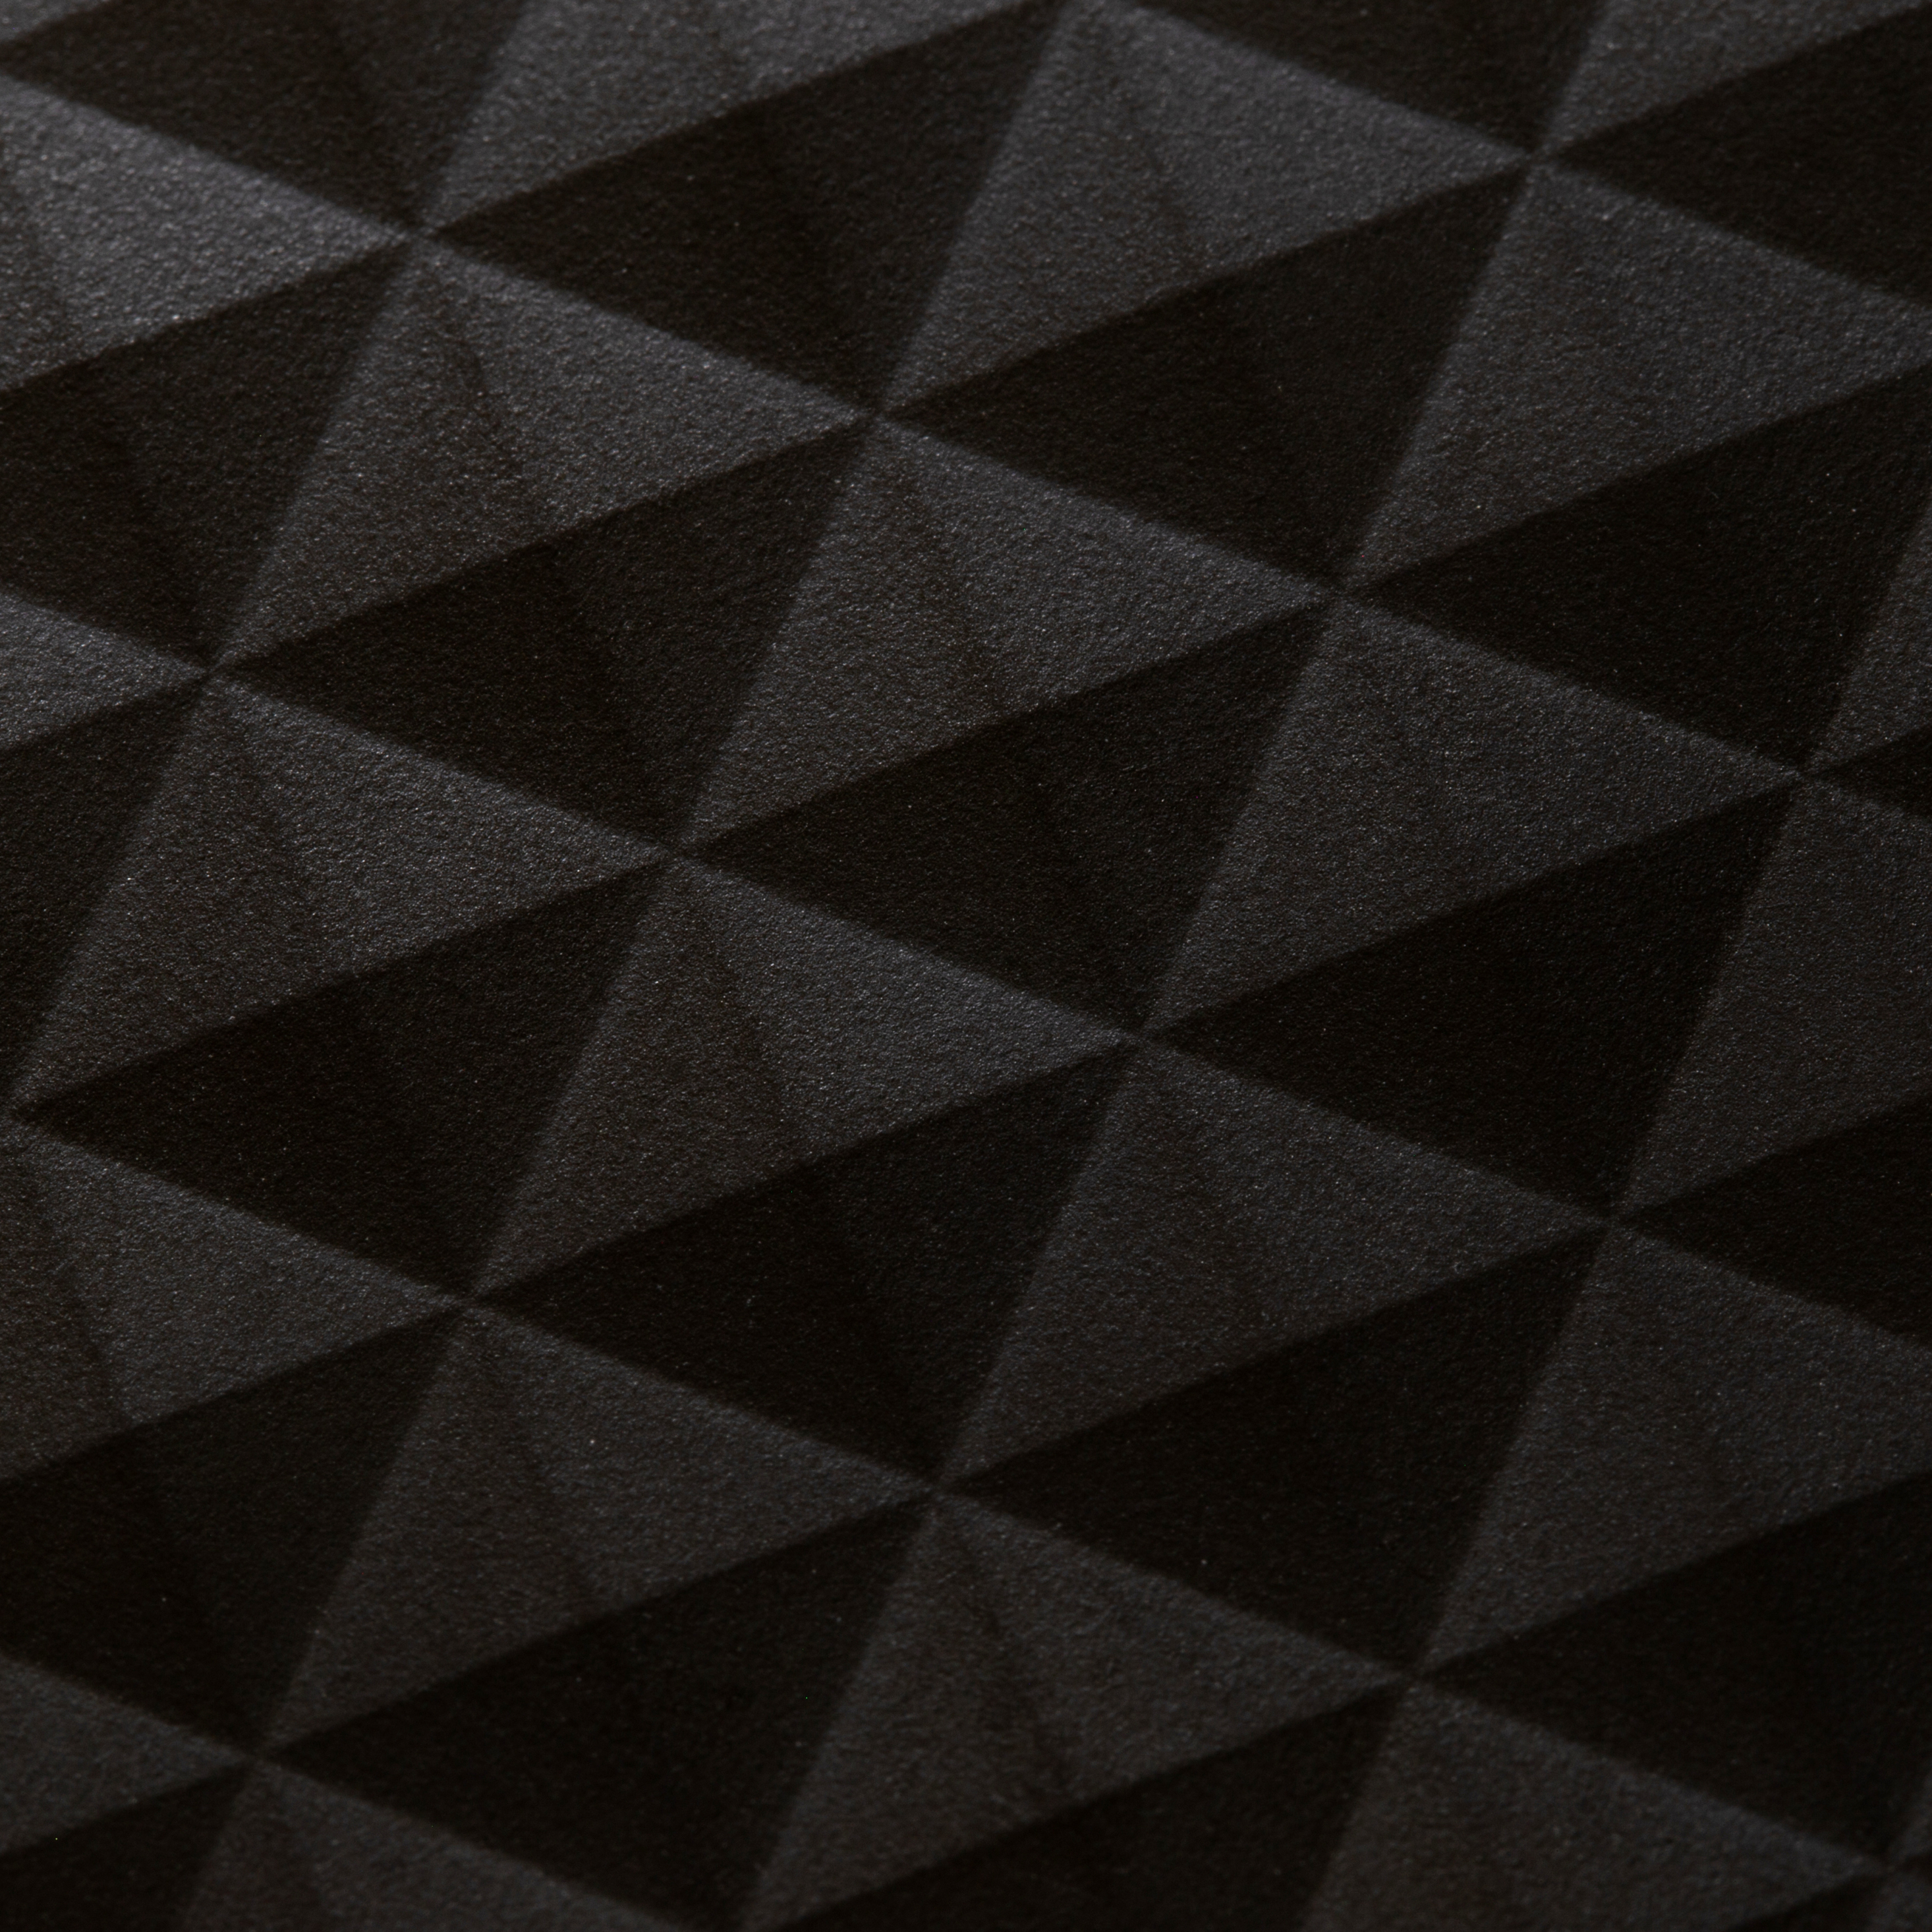 Download 2932x2932 Wallpaper Triangles Squares Black Gray Ipad